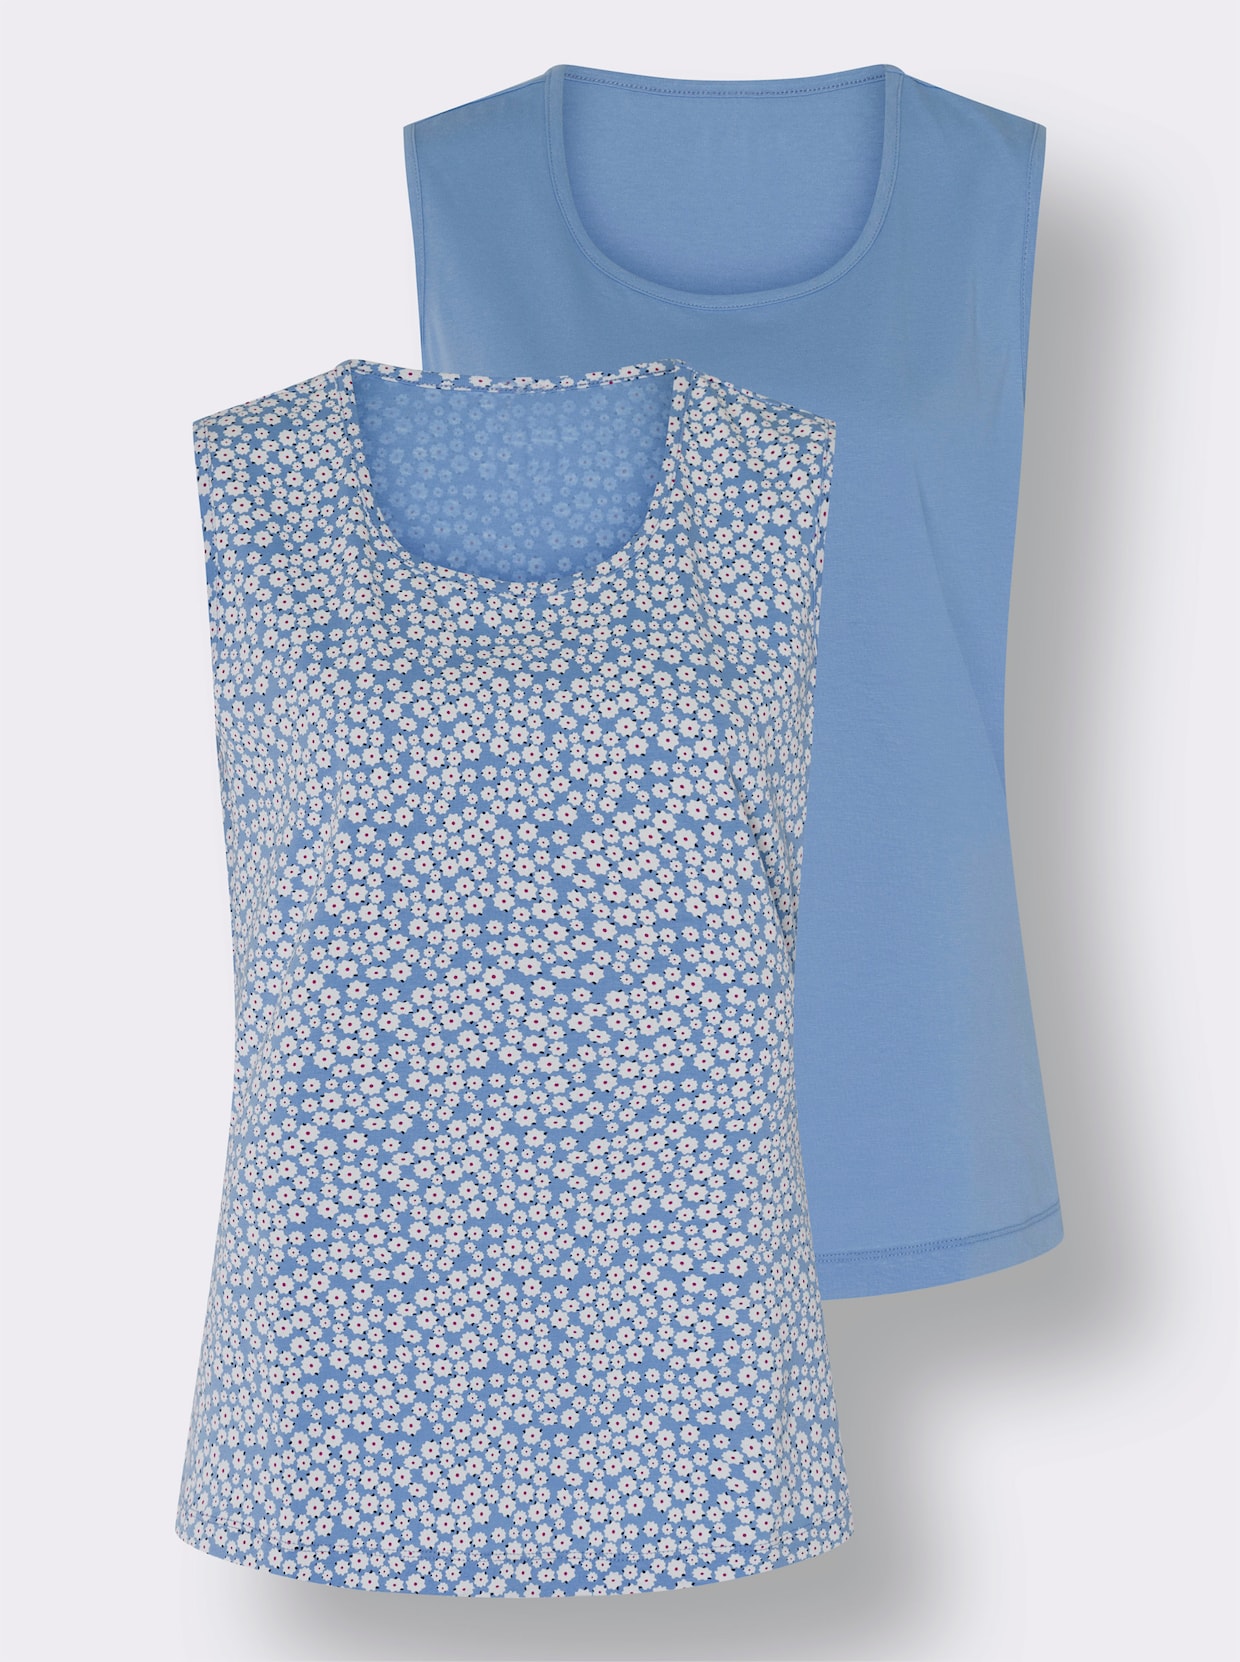 Shirttops - himmelblau + himmelblau-weiß-bedruckt